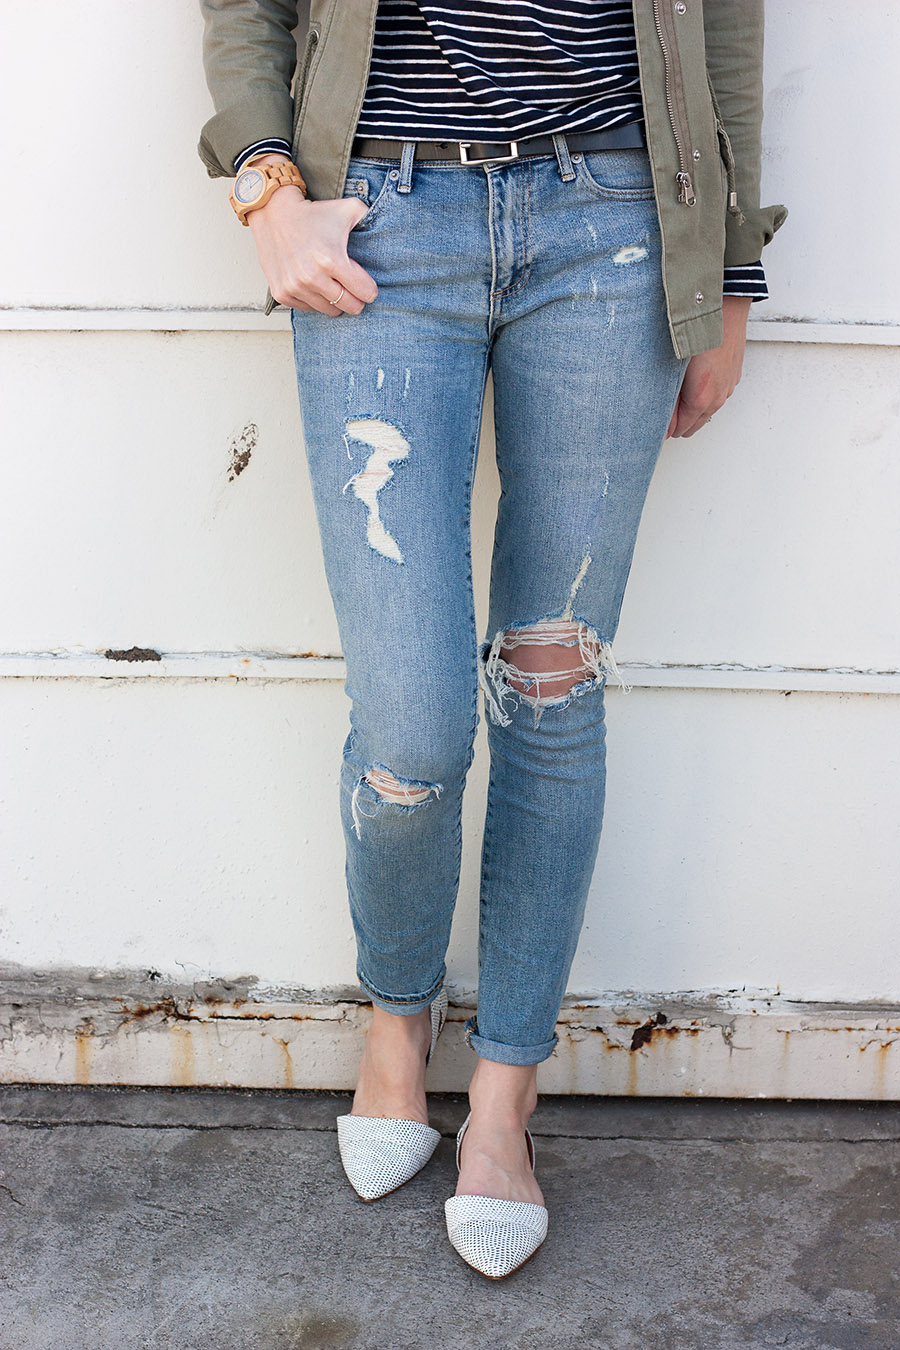 Distressed Skinny Jeans, Madewell Flats